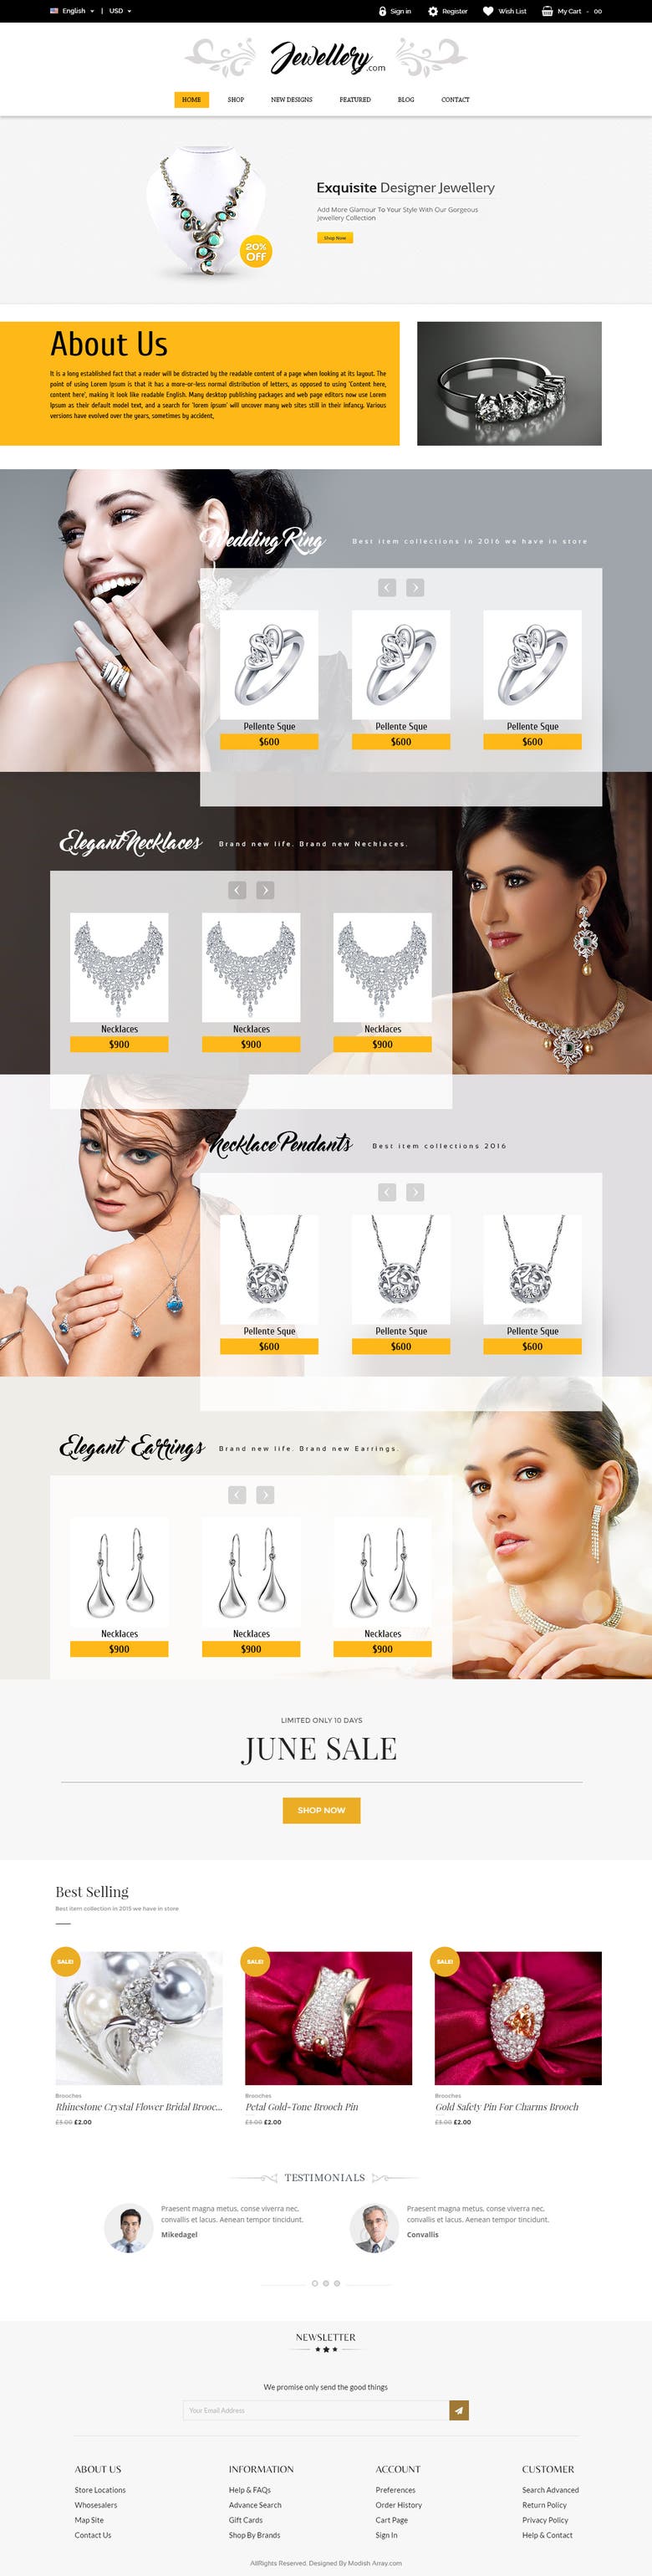 Jewellery Web Layout Design